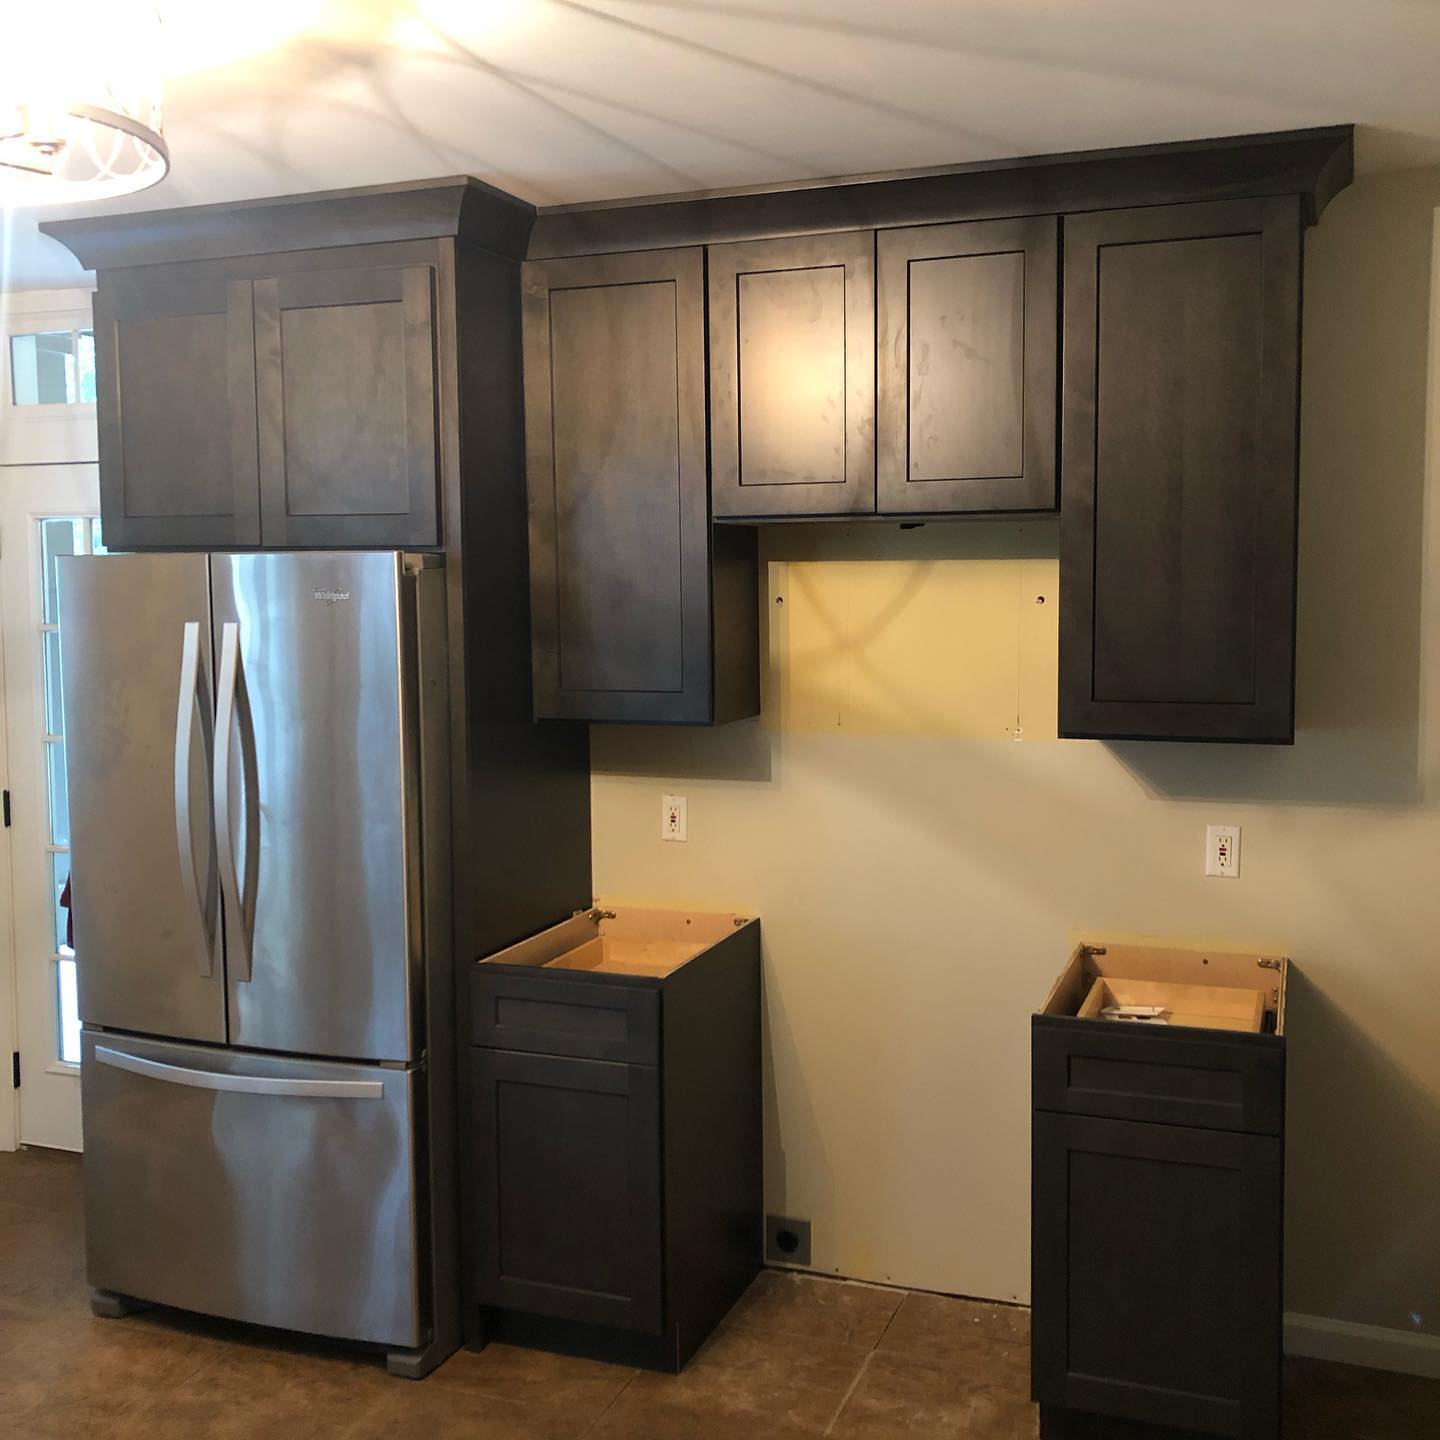 Basement Kitchen Cabinets Installed 2